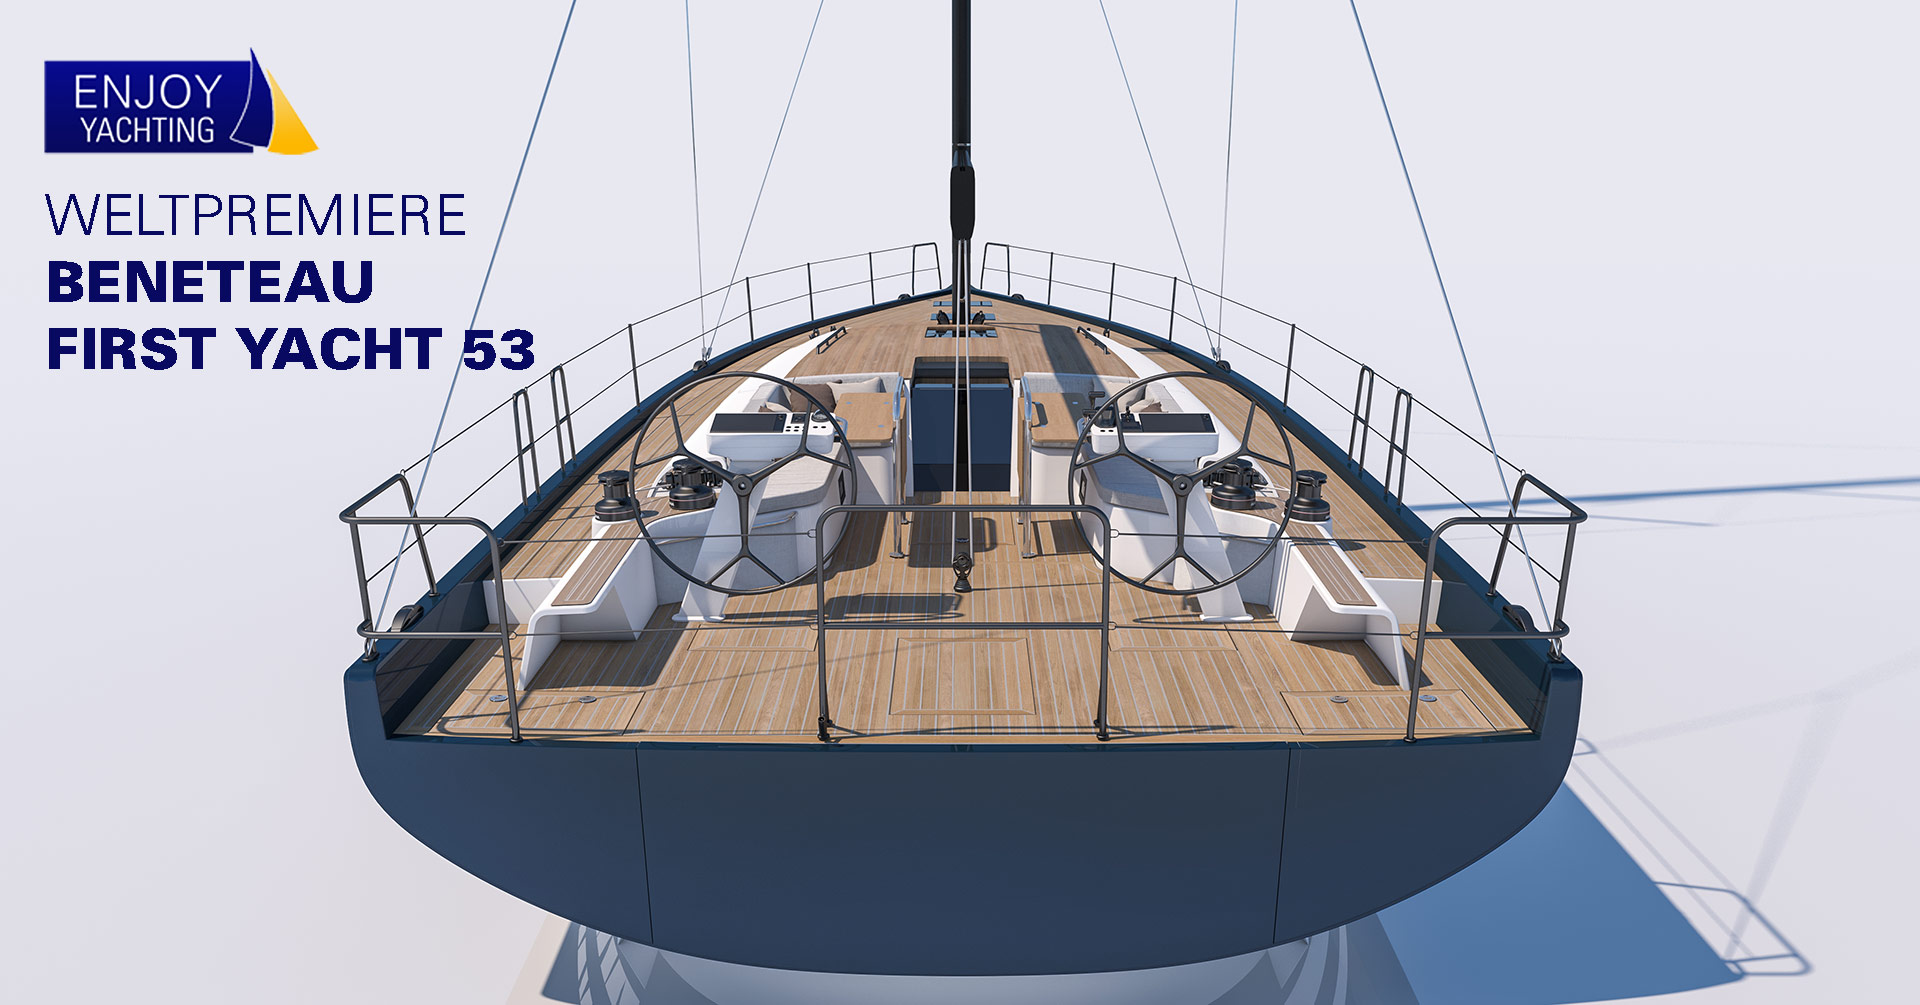 Beneteau-First-Yacht-53-enjoy-yachting-kaufen